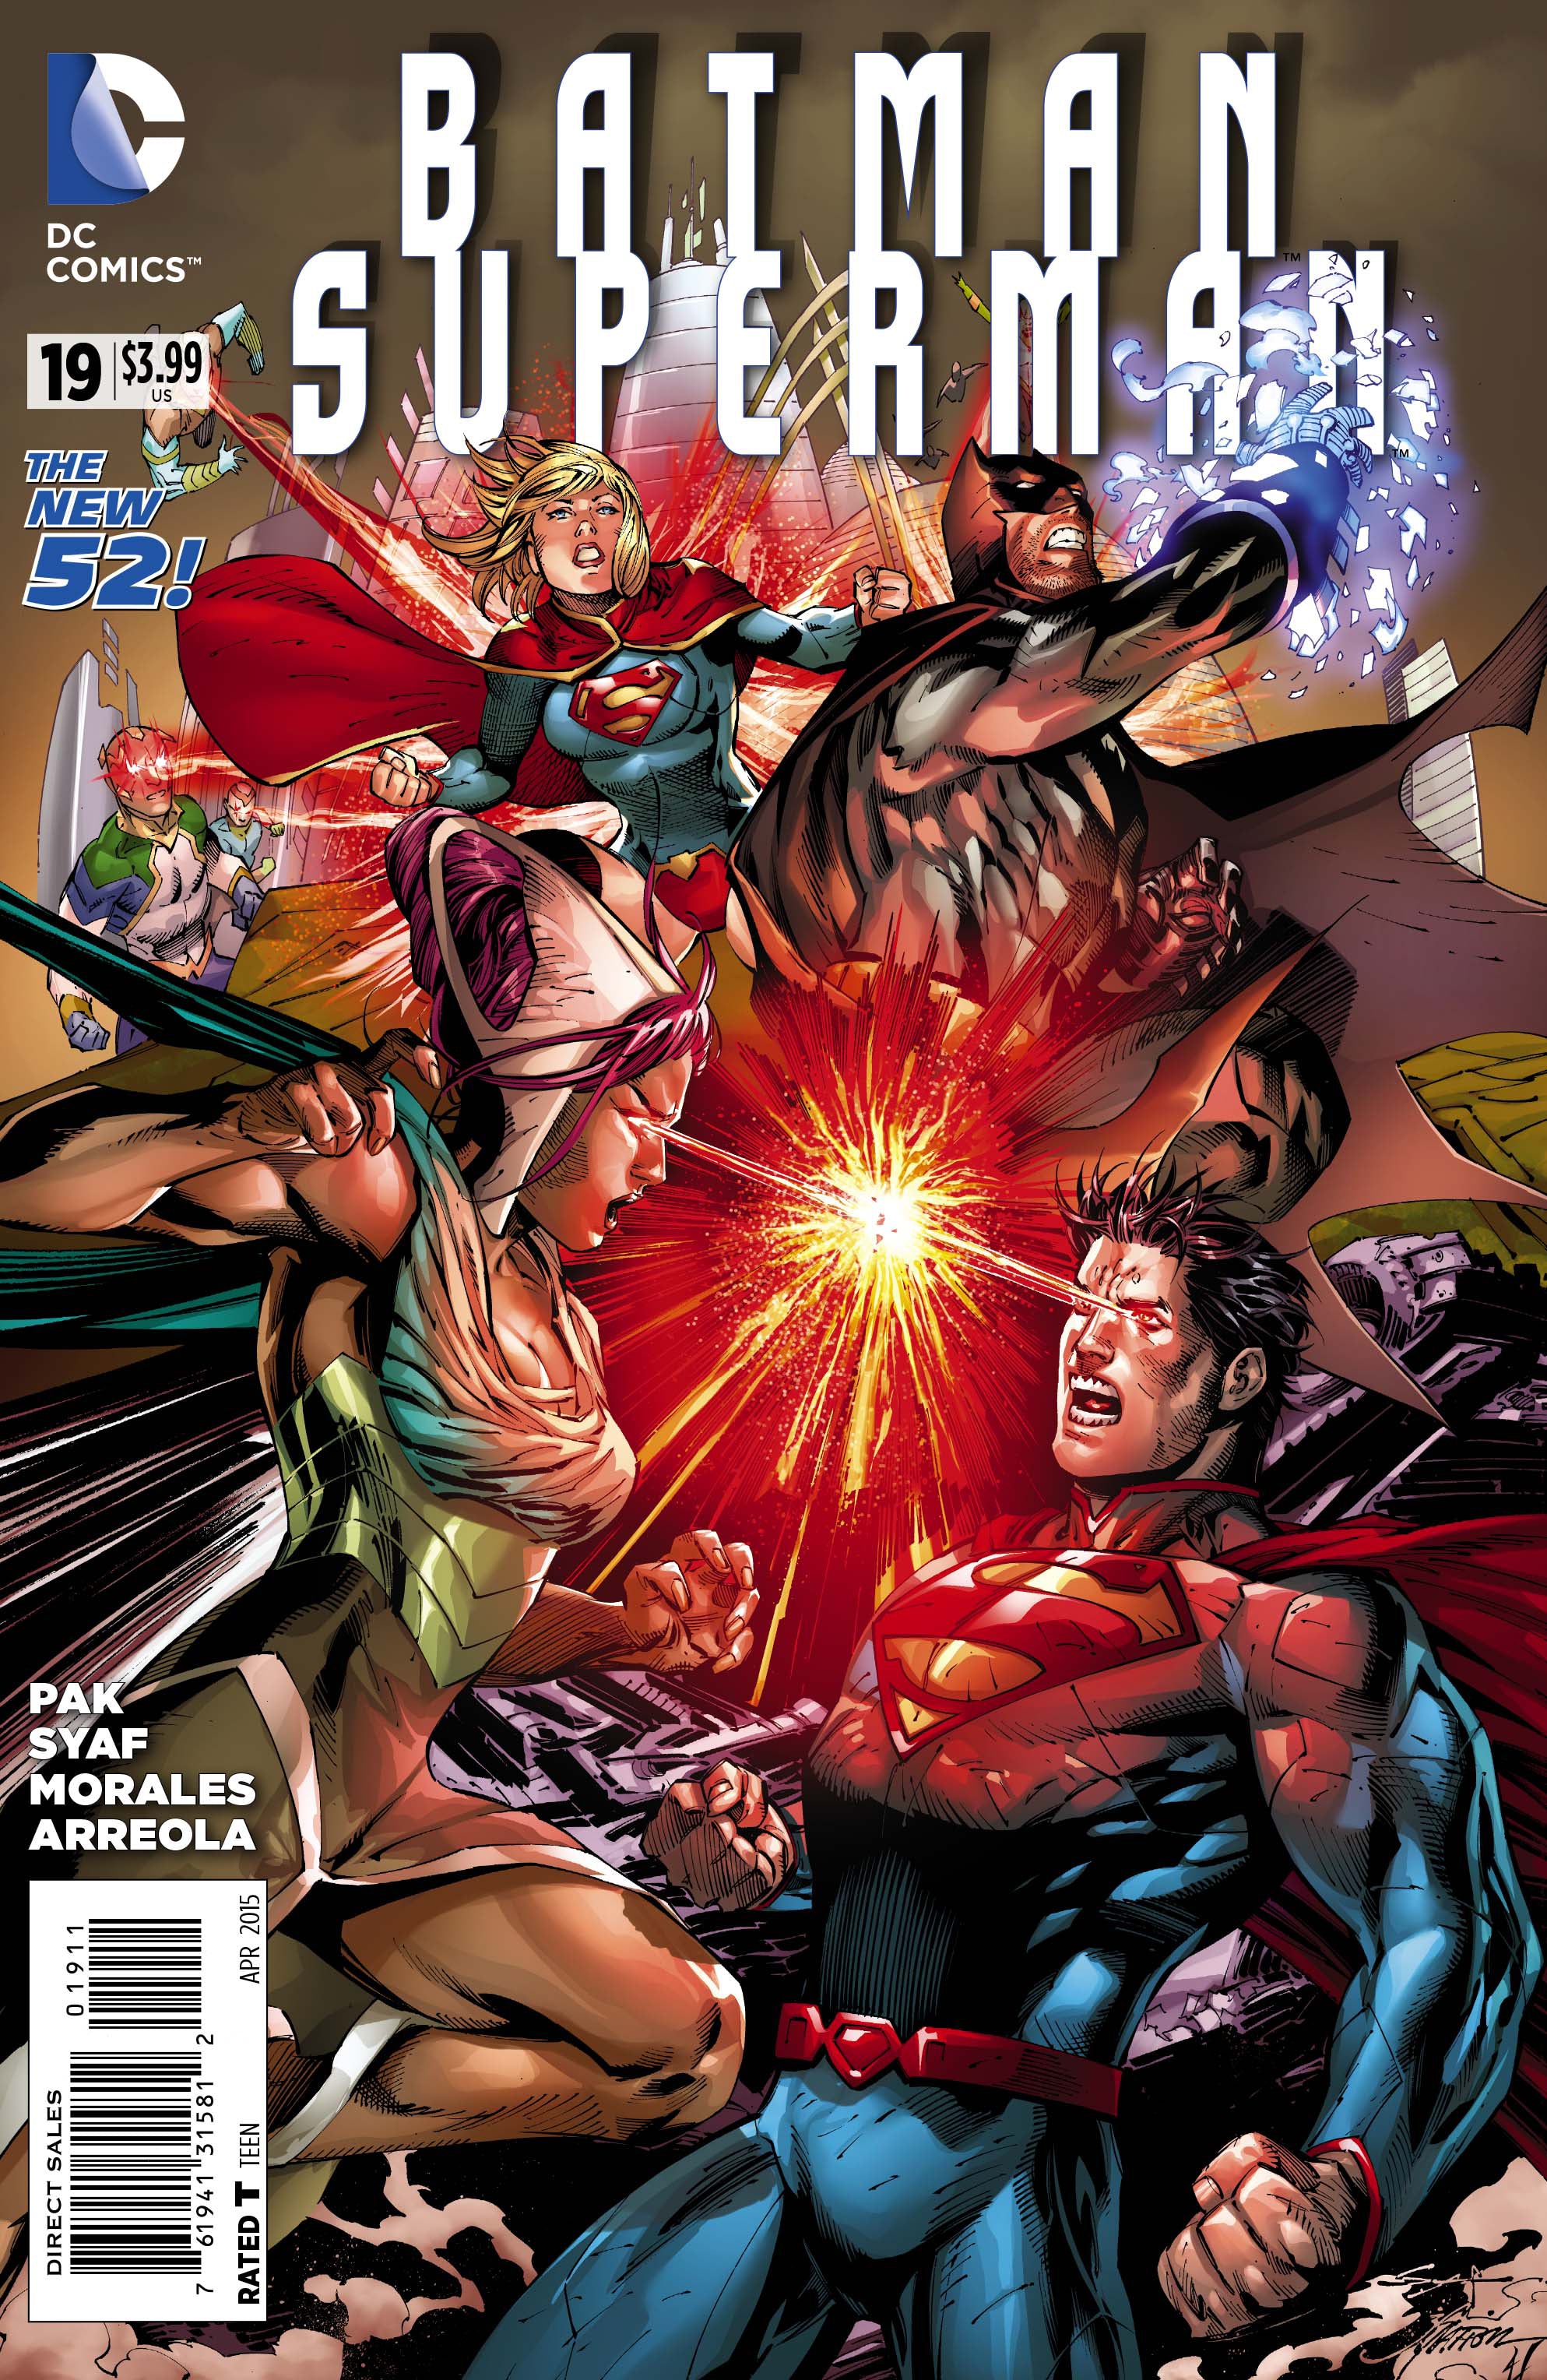 BATMAN SUPERMAN #19 | Game Master's Emporium (The New GME)